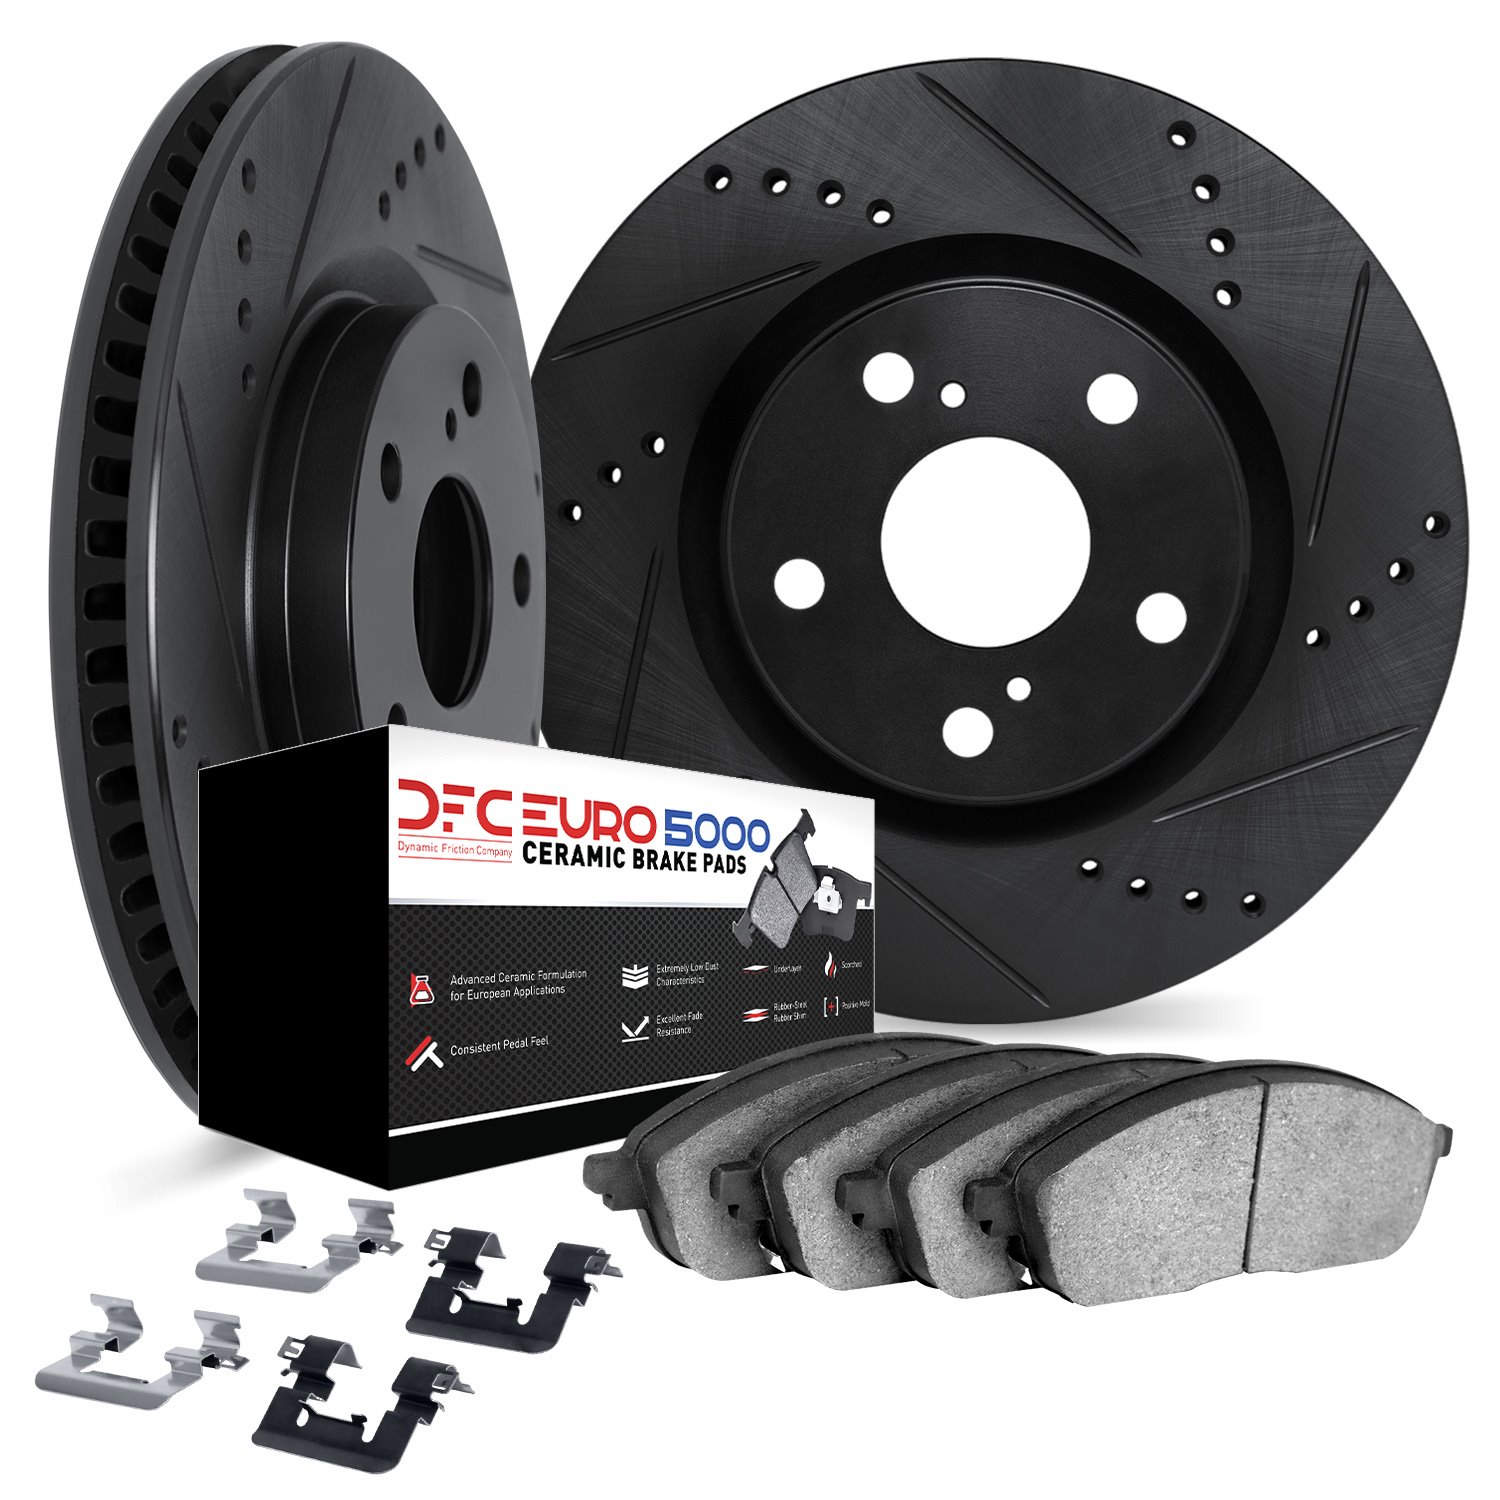 8612-75011 Drilled/Slotted Brake Rotors w/5000 Euro Ceramic Brake Pads Kit & Hardware [Black], Fits Select Lexus/Toyota/Scion, P